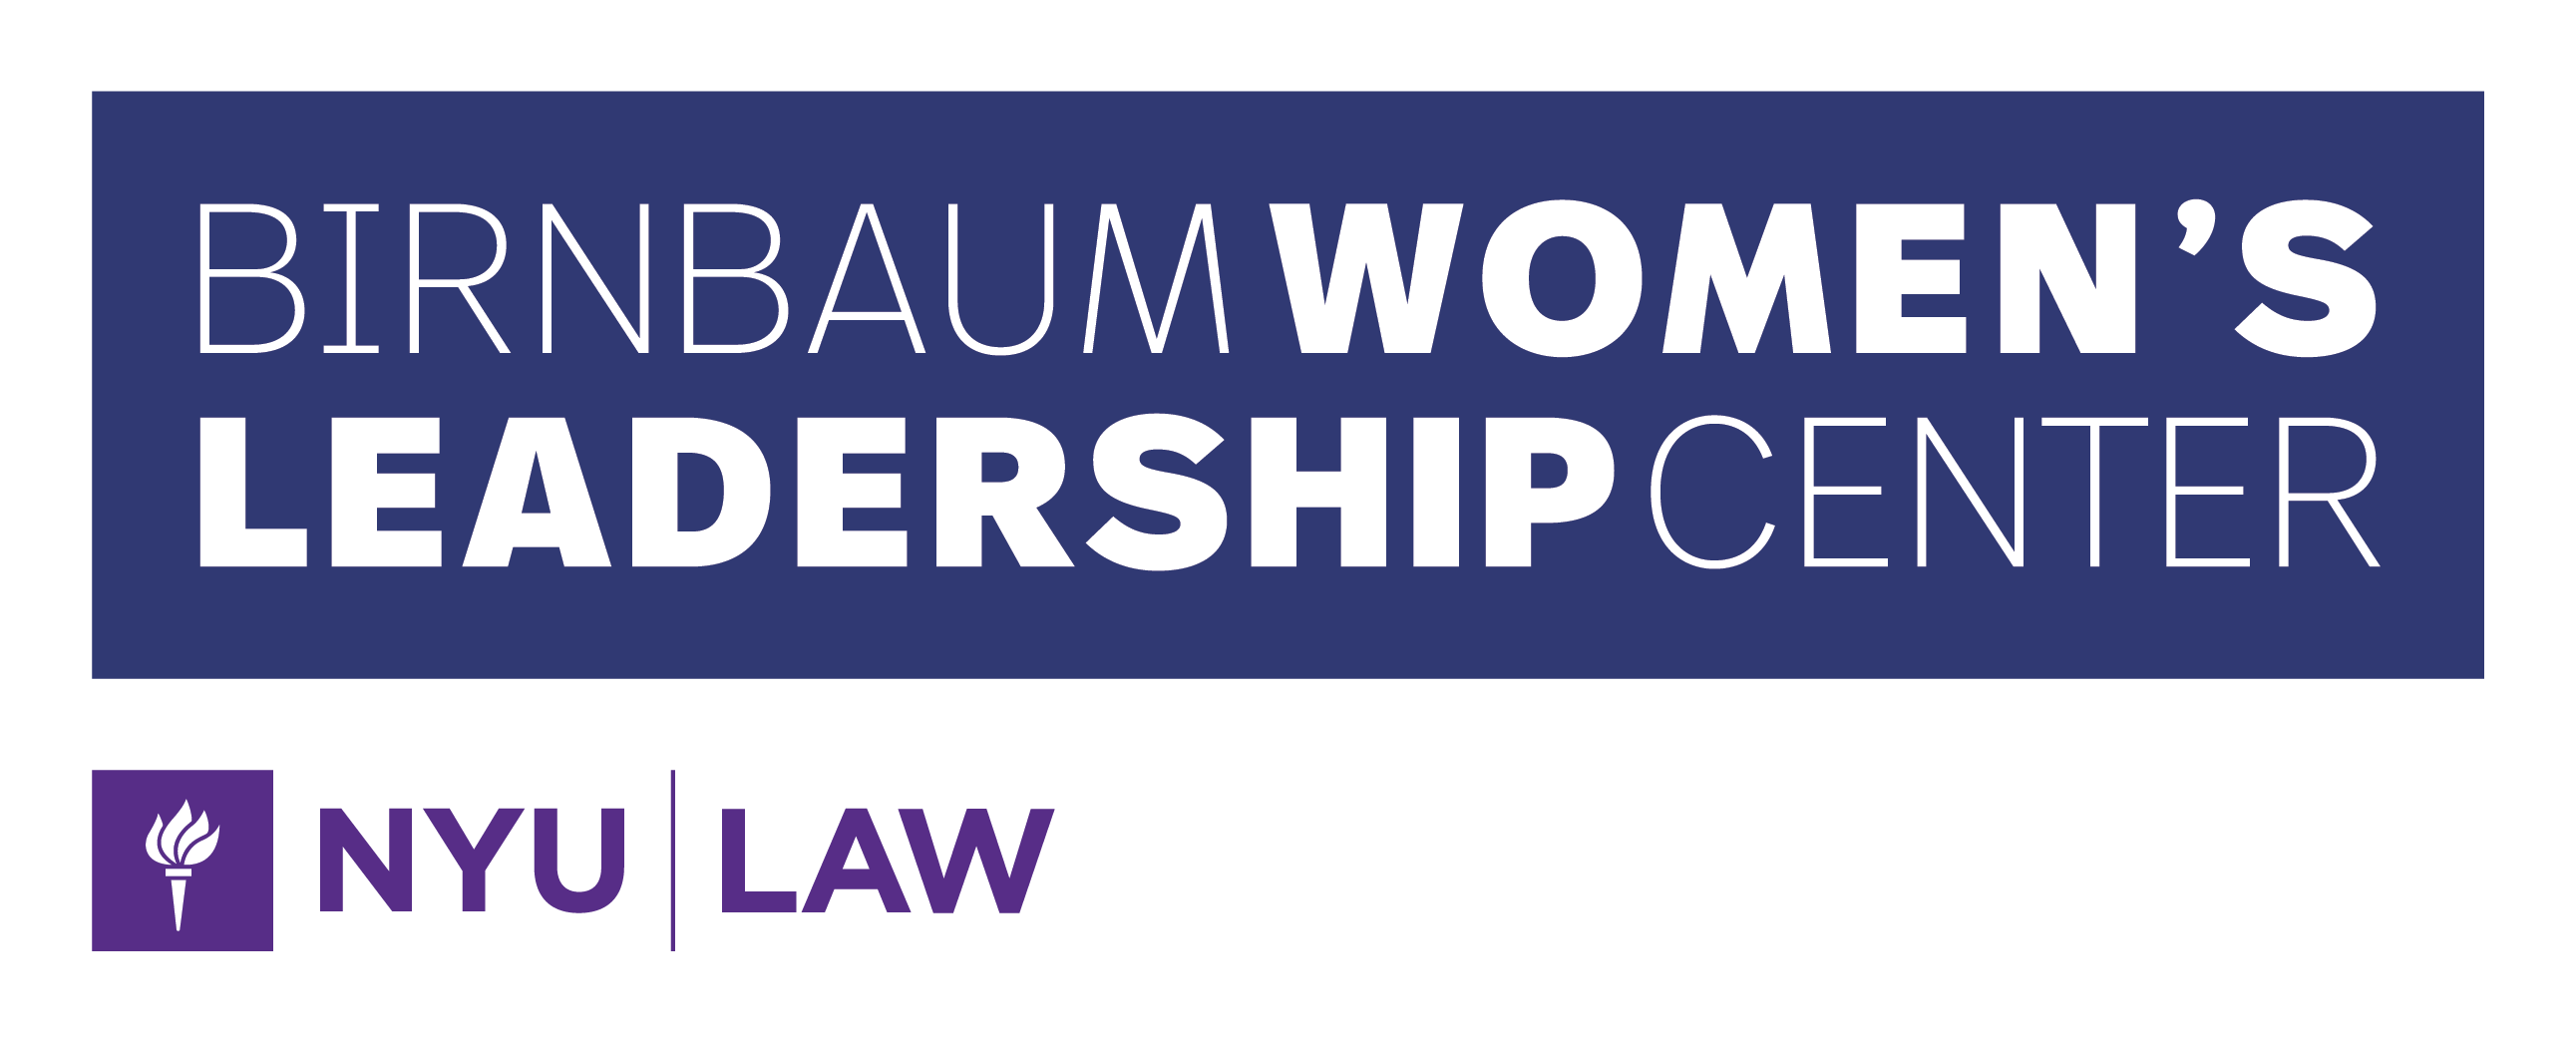 Birnbaum Women's Leadership Center